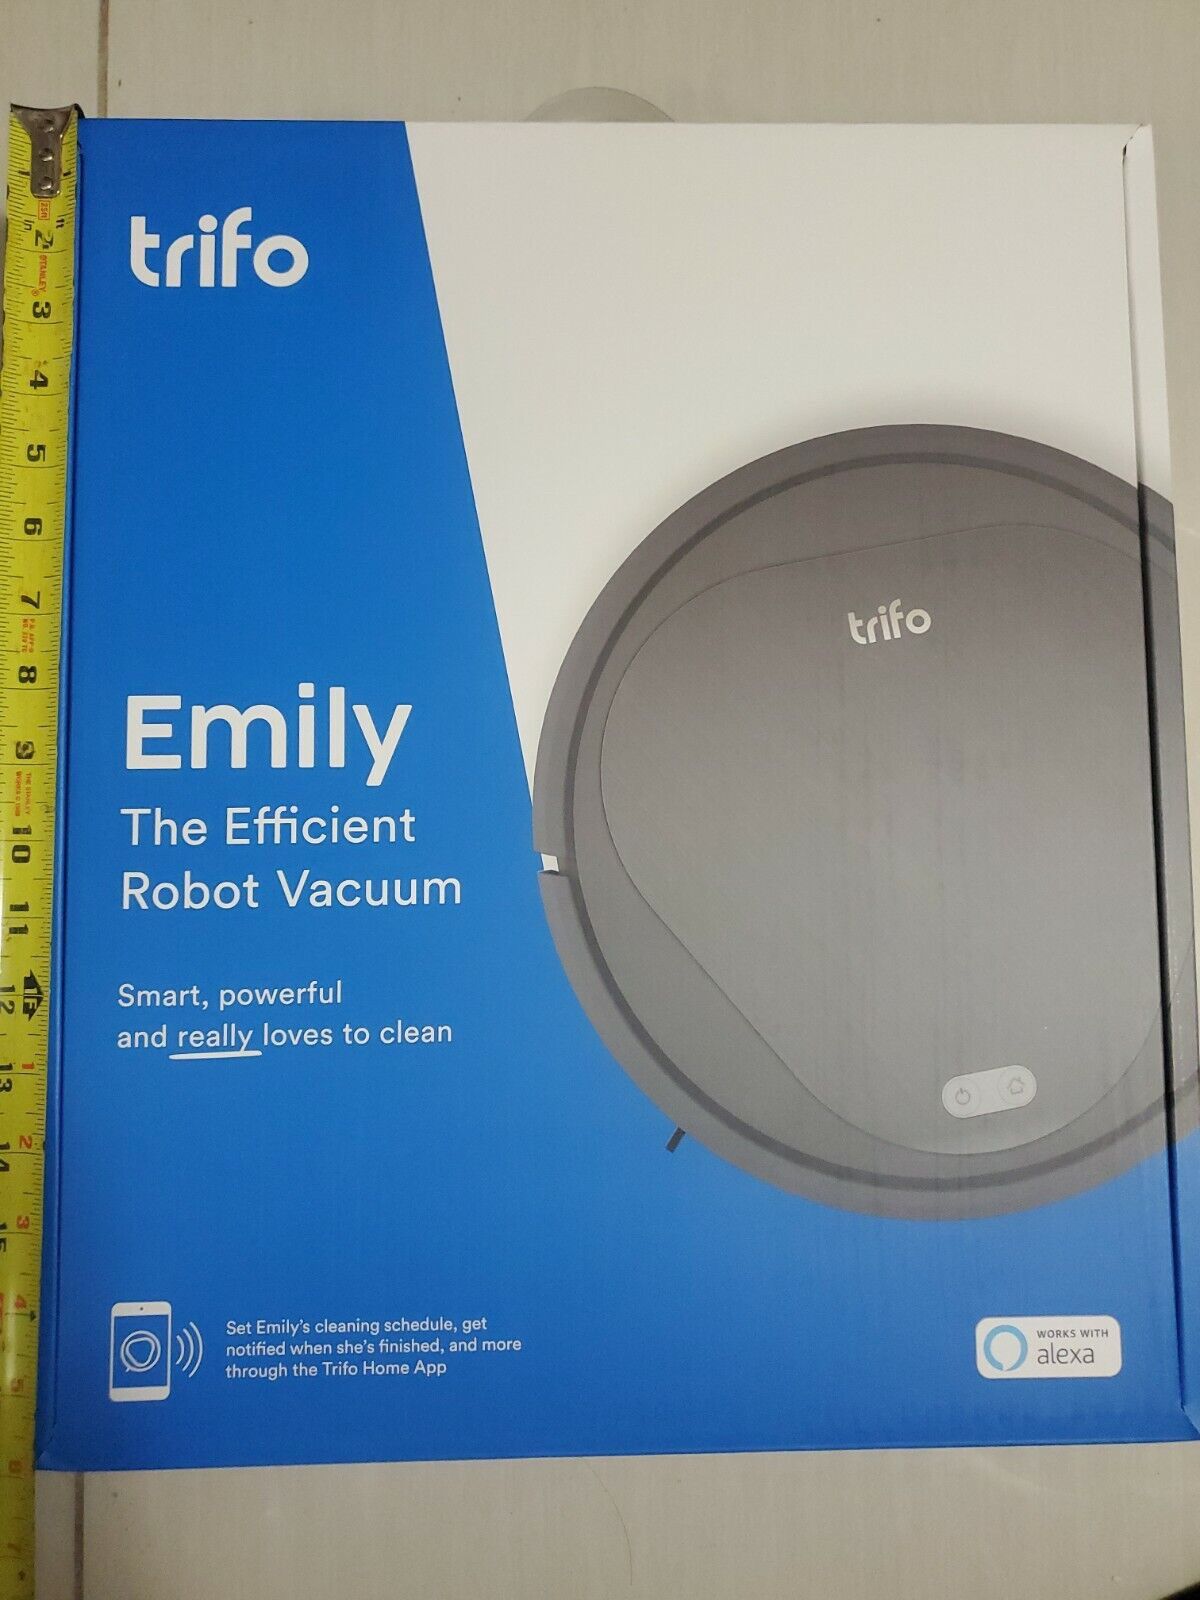 Trifo Emily Essential Robot Vacuum, Cleaner, Carpet, Floor, works with Alexa